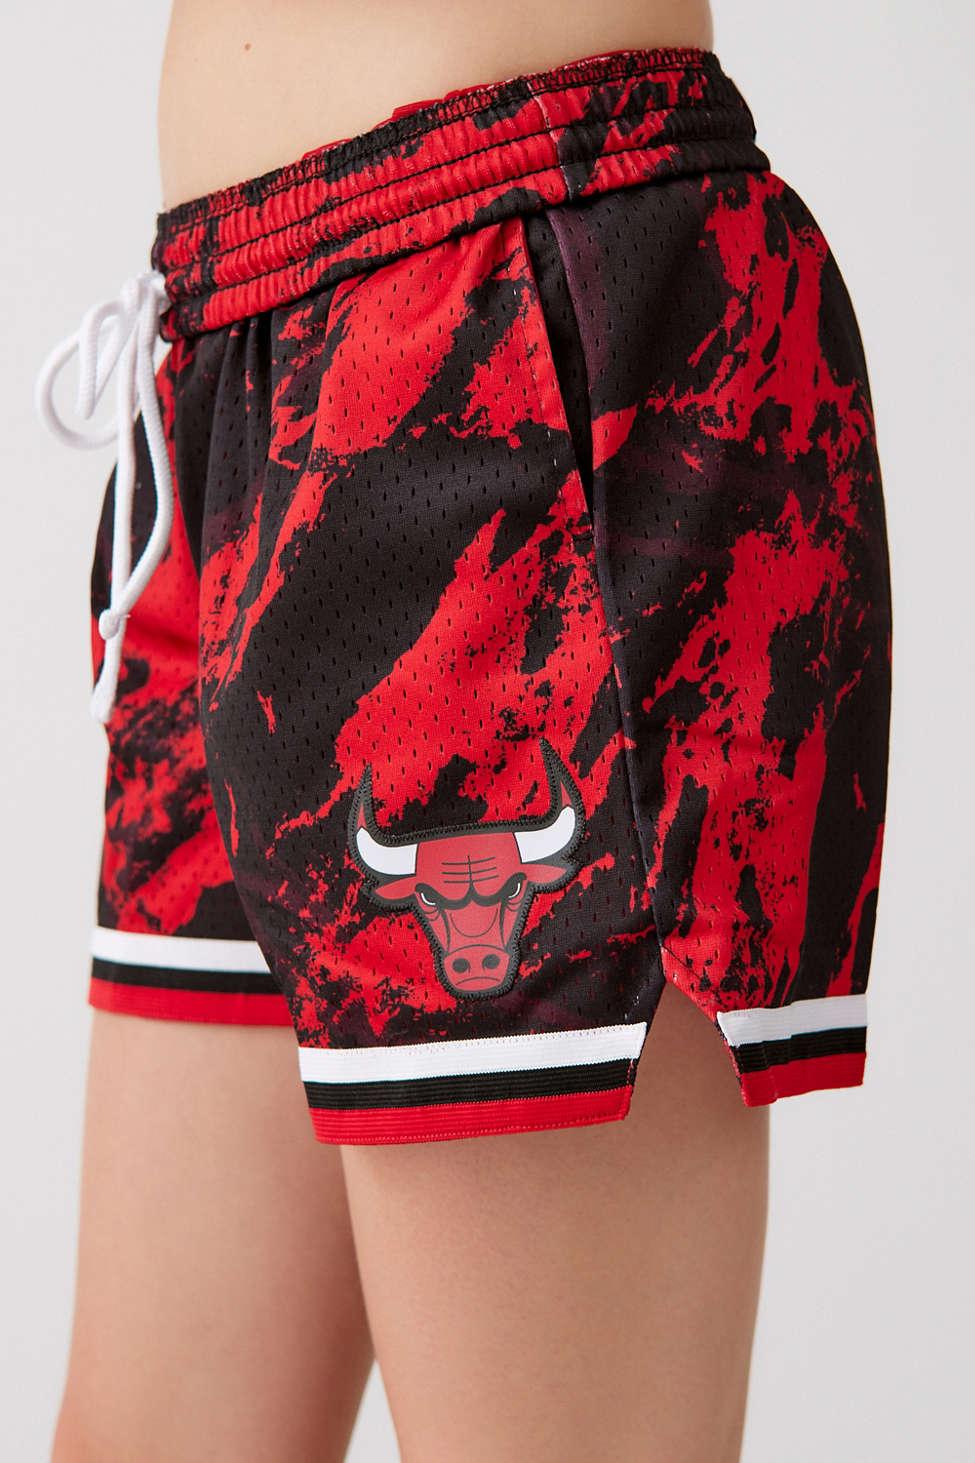 Mitchell & Ness Chicago Bulls Galaxy Swingman Shorts Red